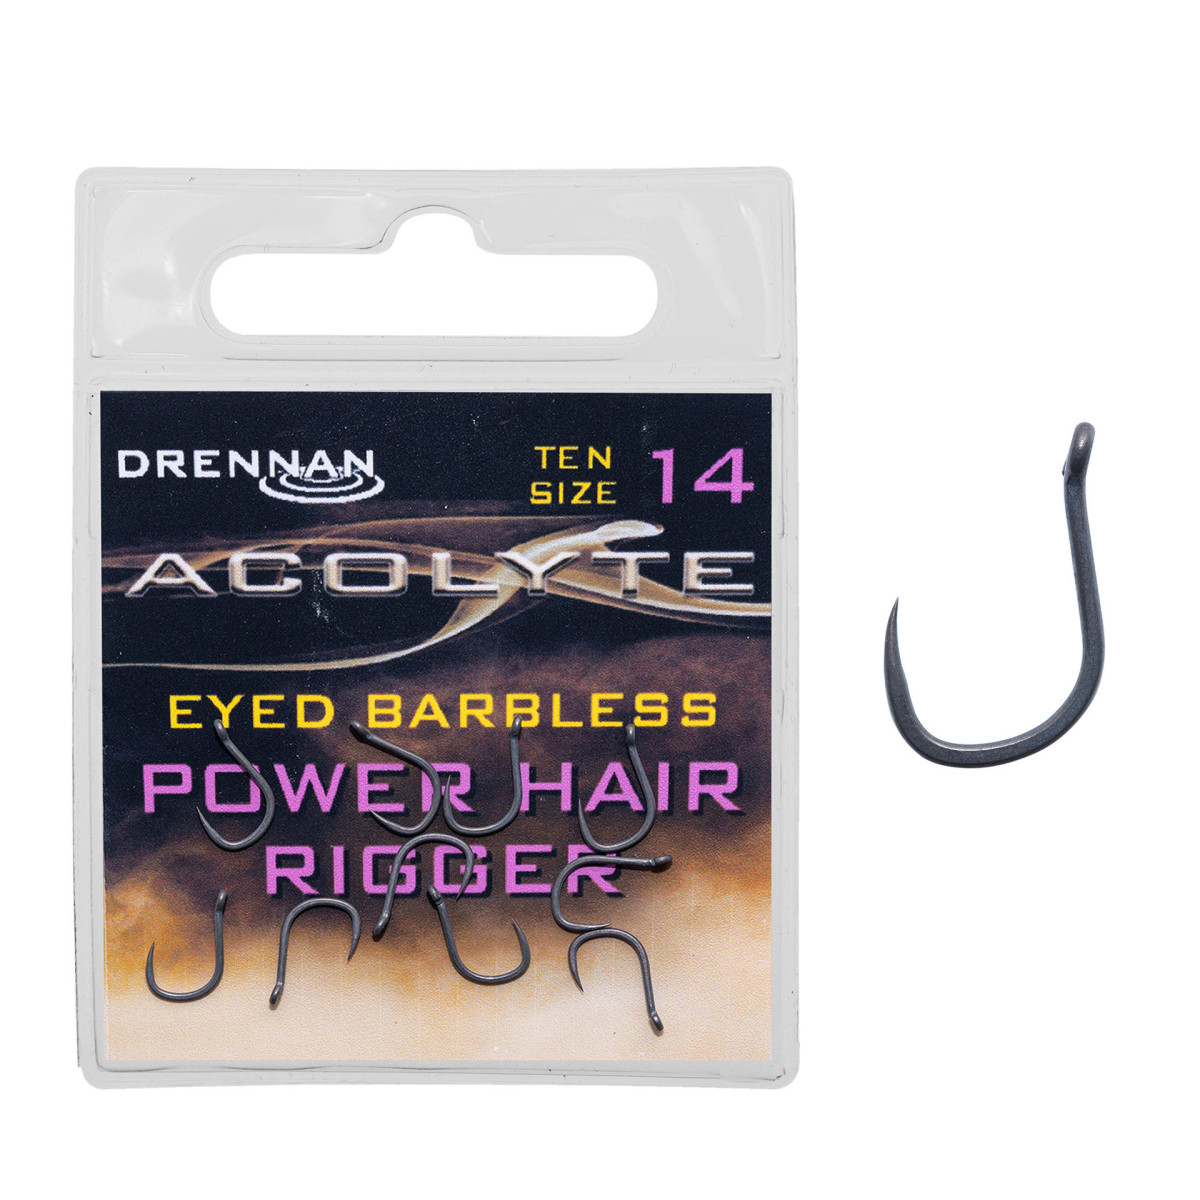 Haczyki Drennan Acolyte Power Hair Rigger - roz. 14